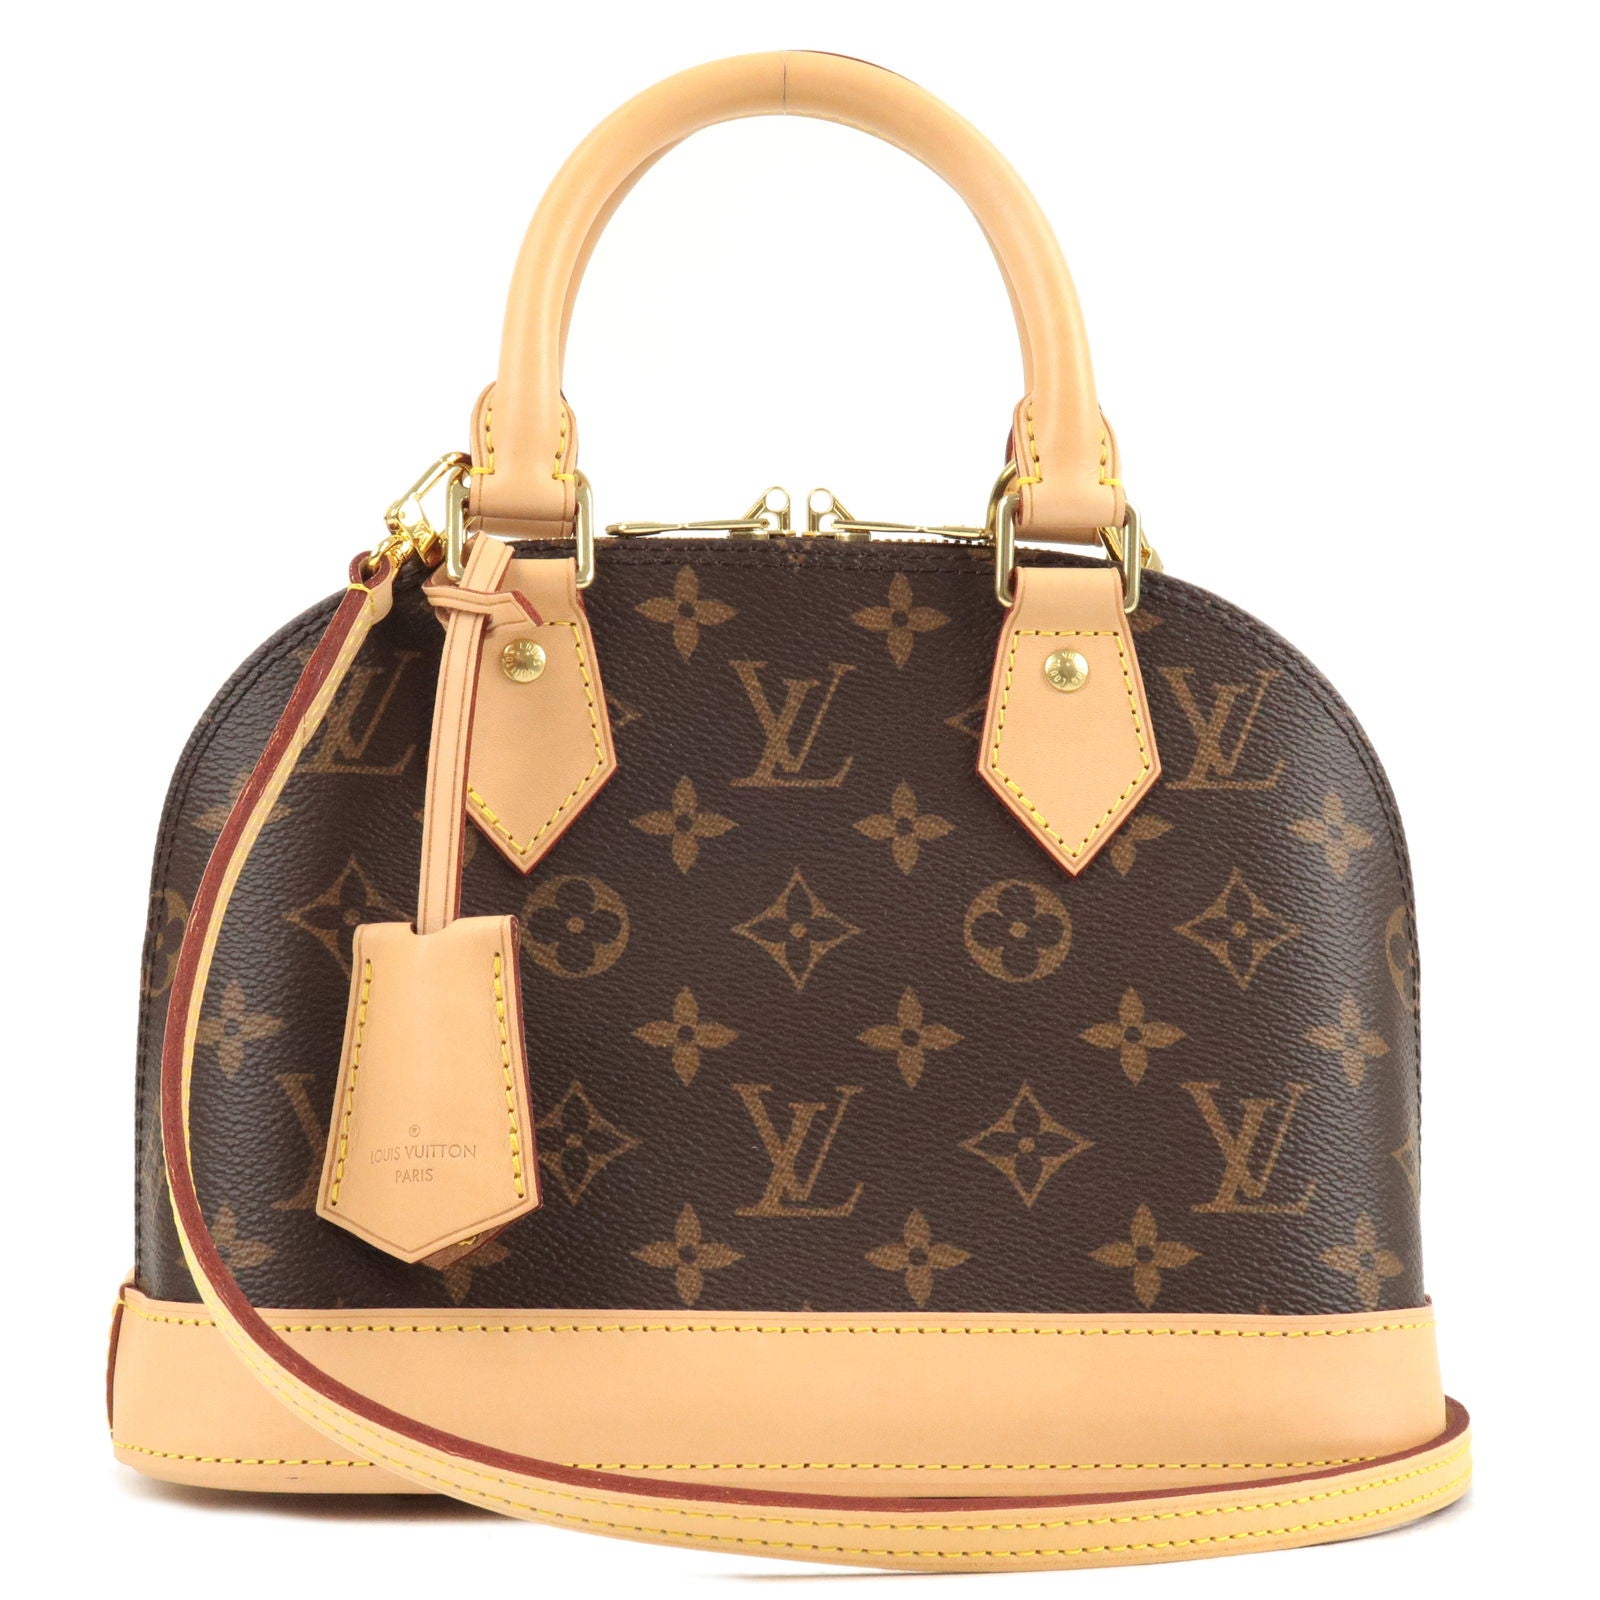 Hand - Louis Vuitton e shoulder bag in damier graphite